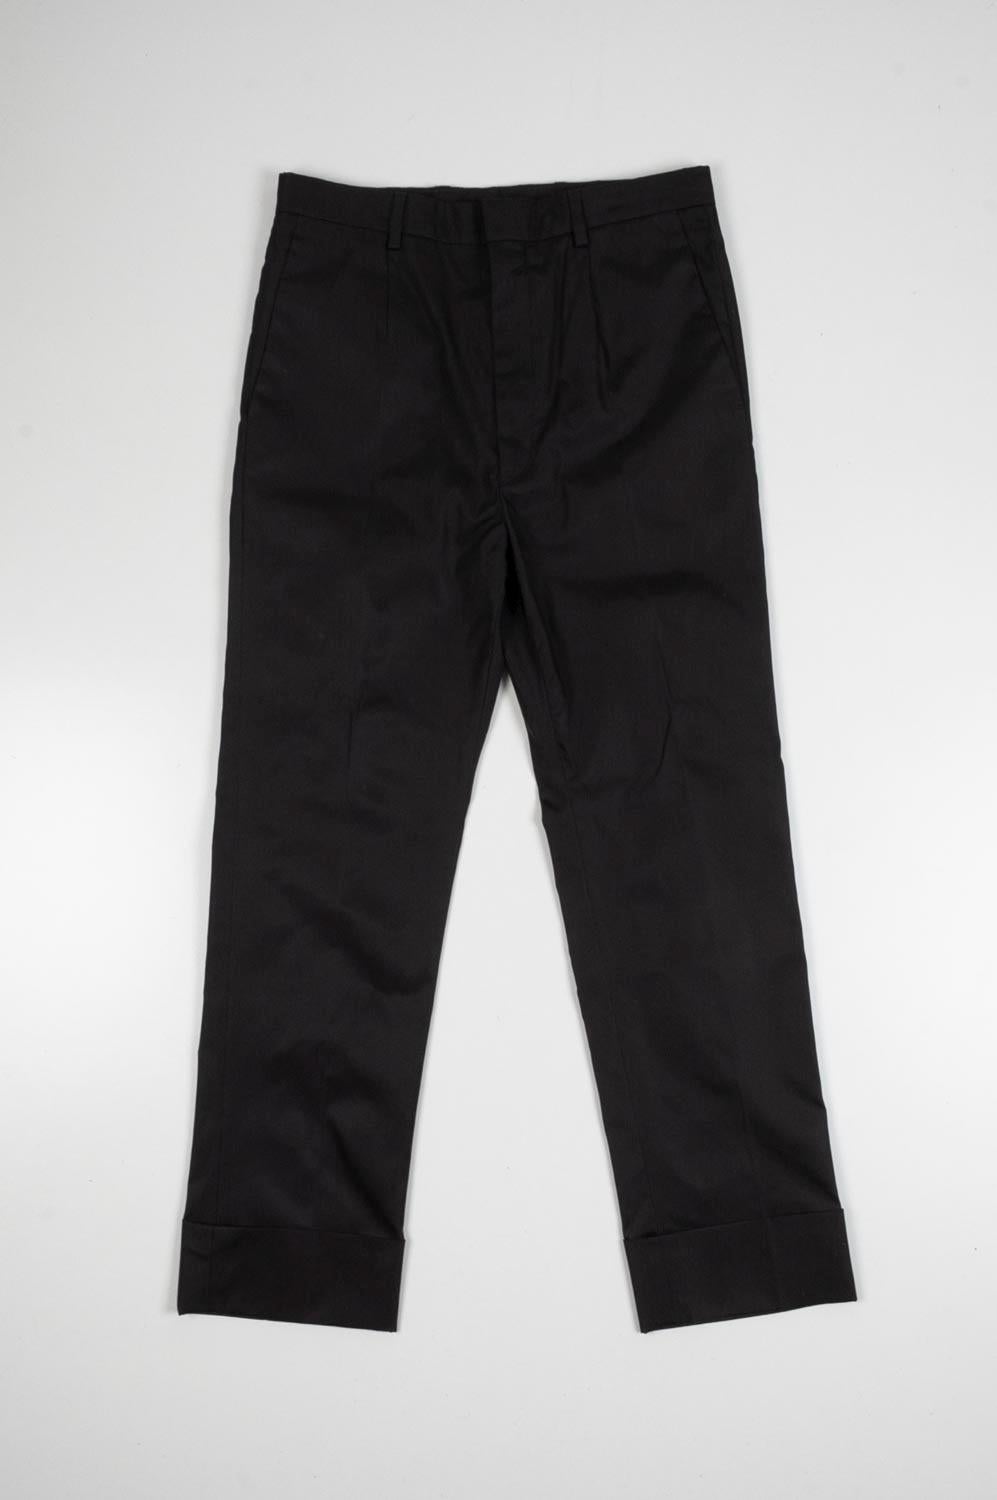 Black Prada Re-Nylon Men Pants Casual Size ITA46 (S/M), S317 For Sale